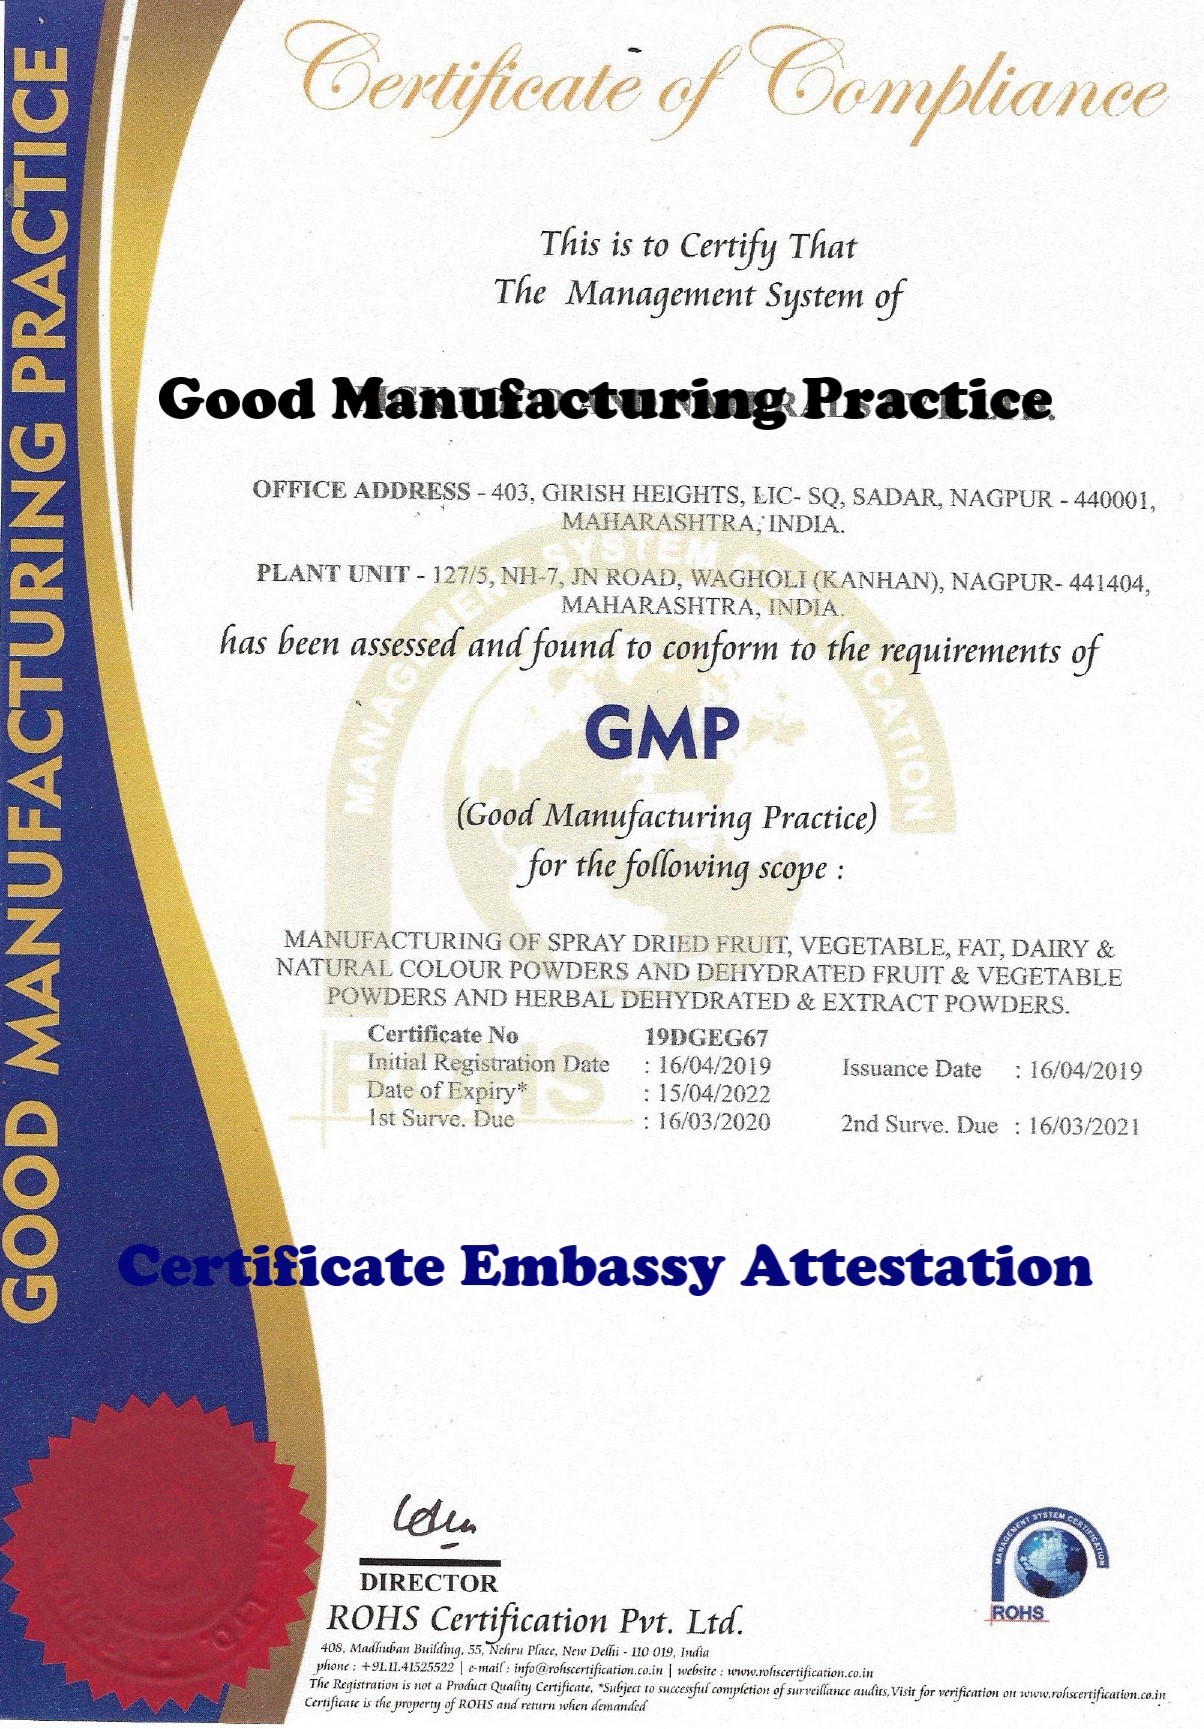 GMP Certificate Attestation from Guatemala Embassy